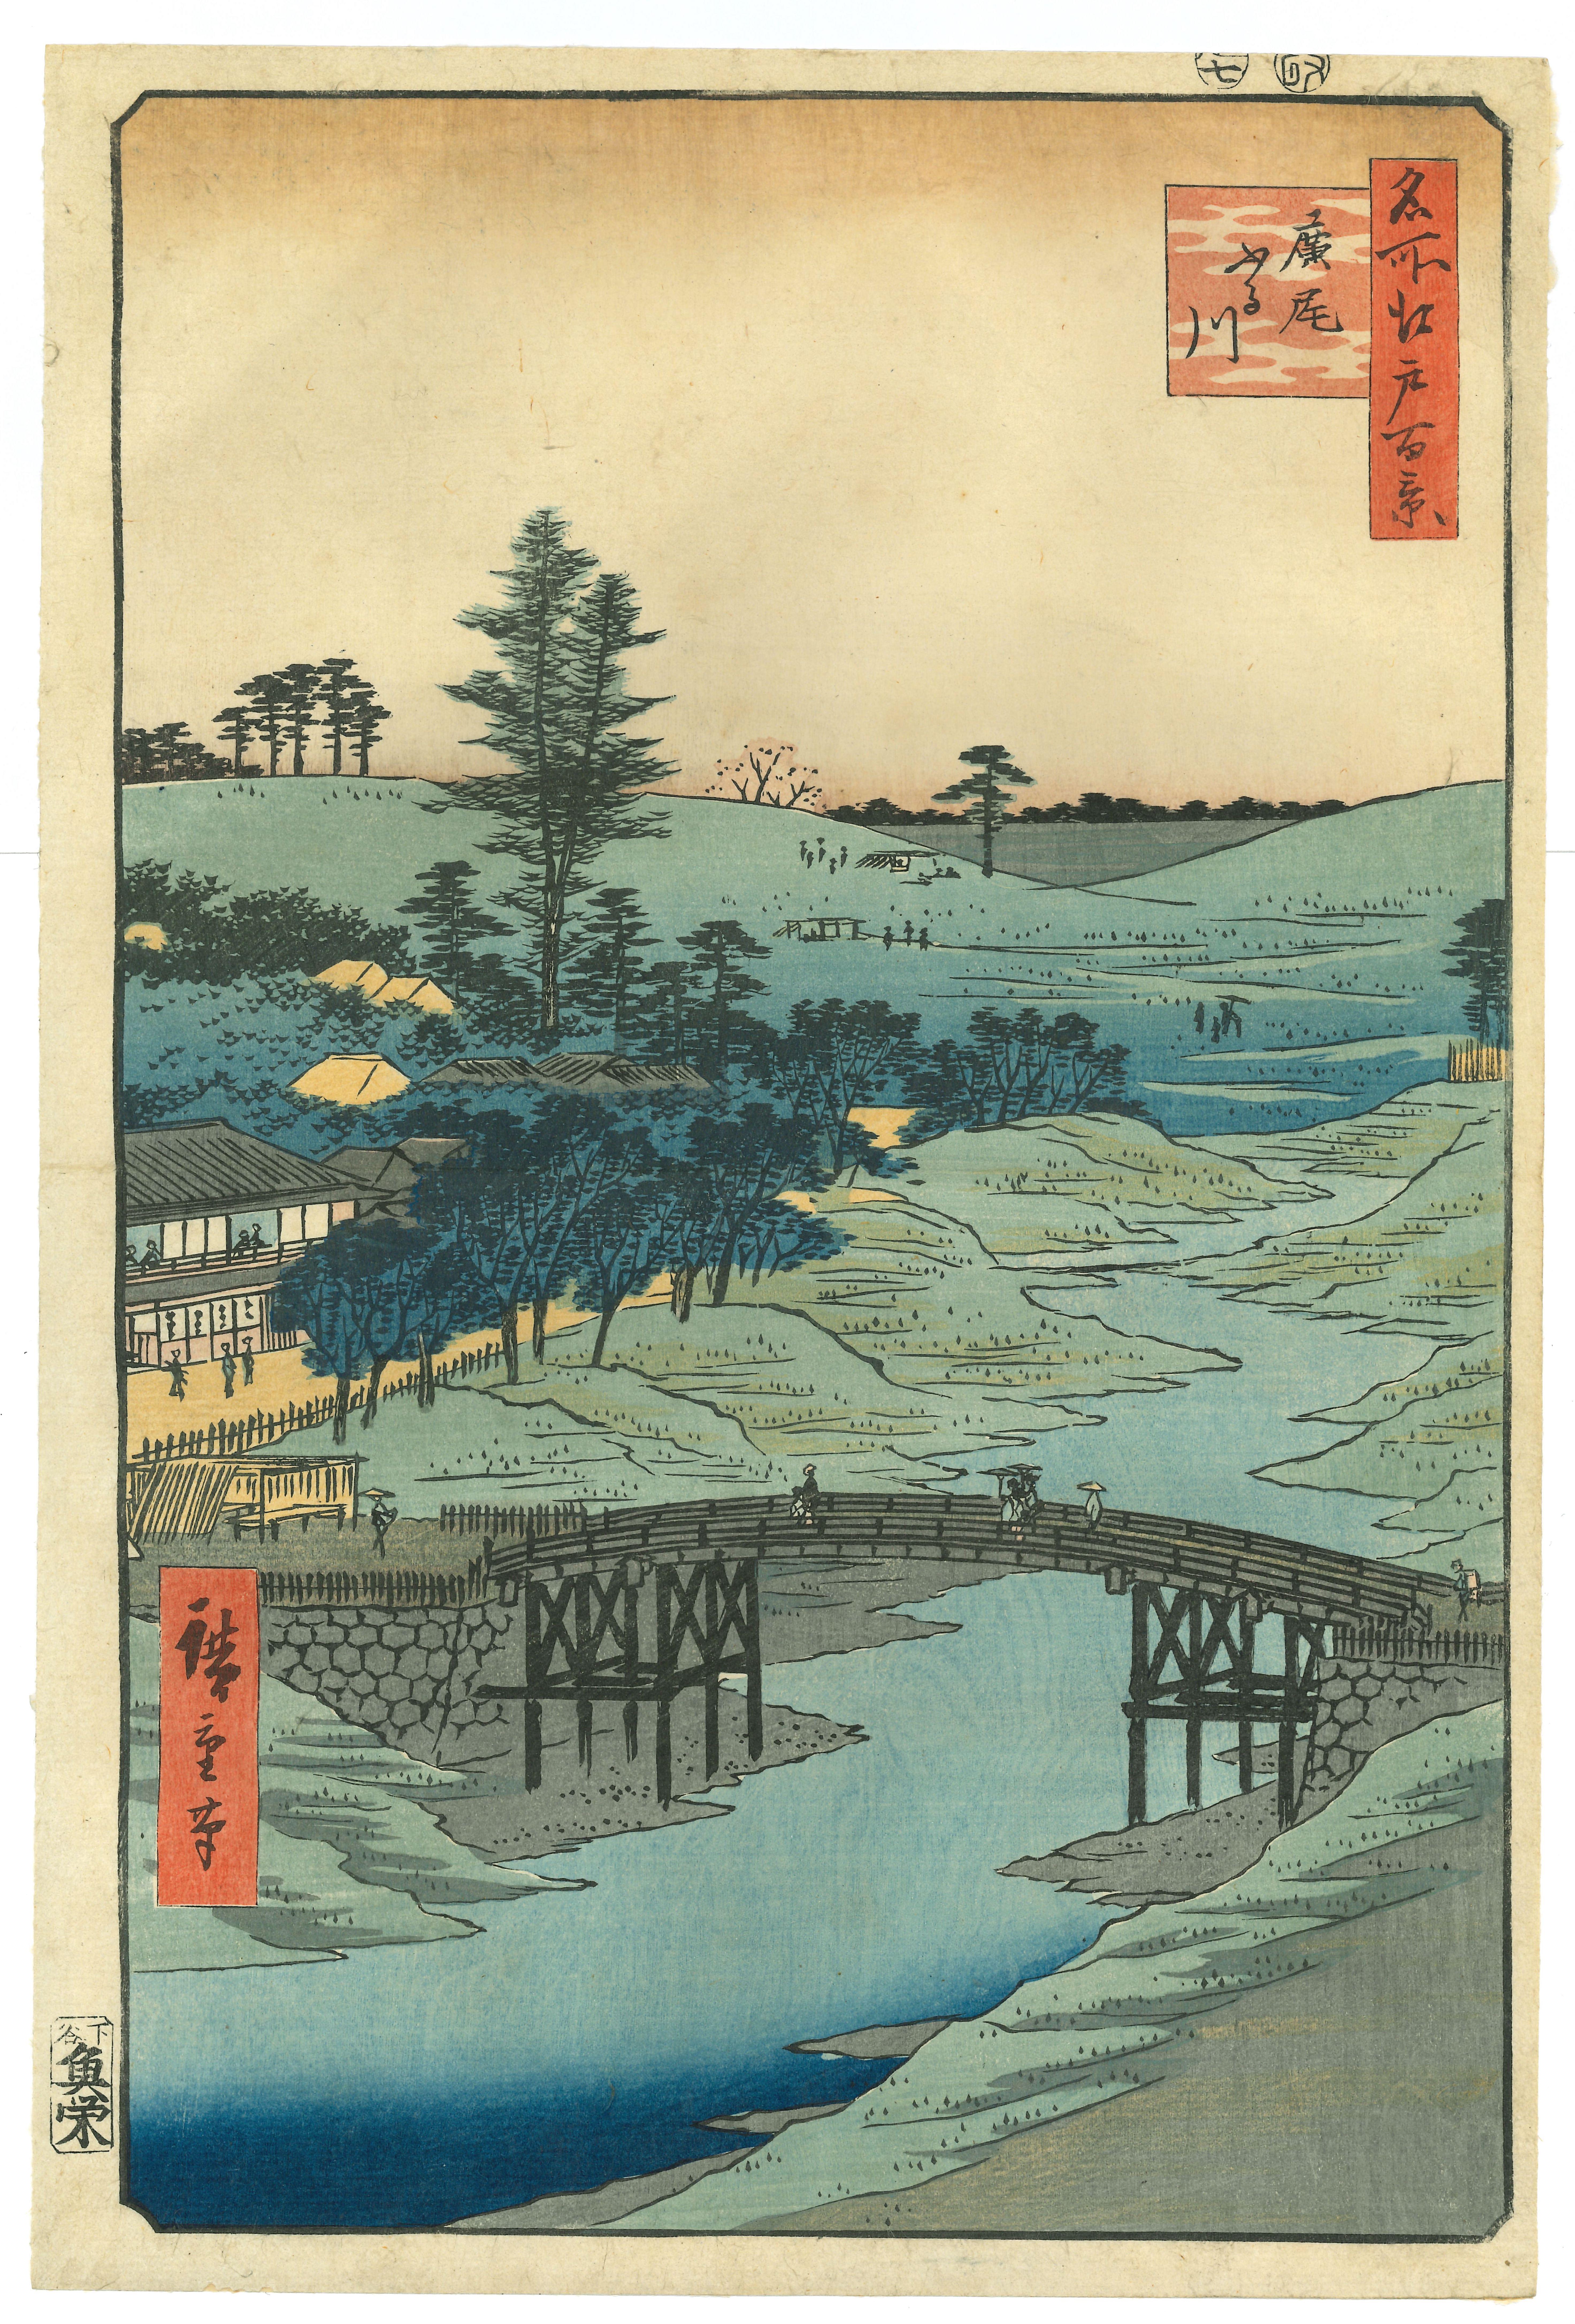 Utagawa Hiroshige (Ando Hiroshige) Landscape Print - View of Furukawa River, Hiroo - by Hiroshige Utagawa - 1856